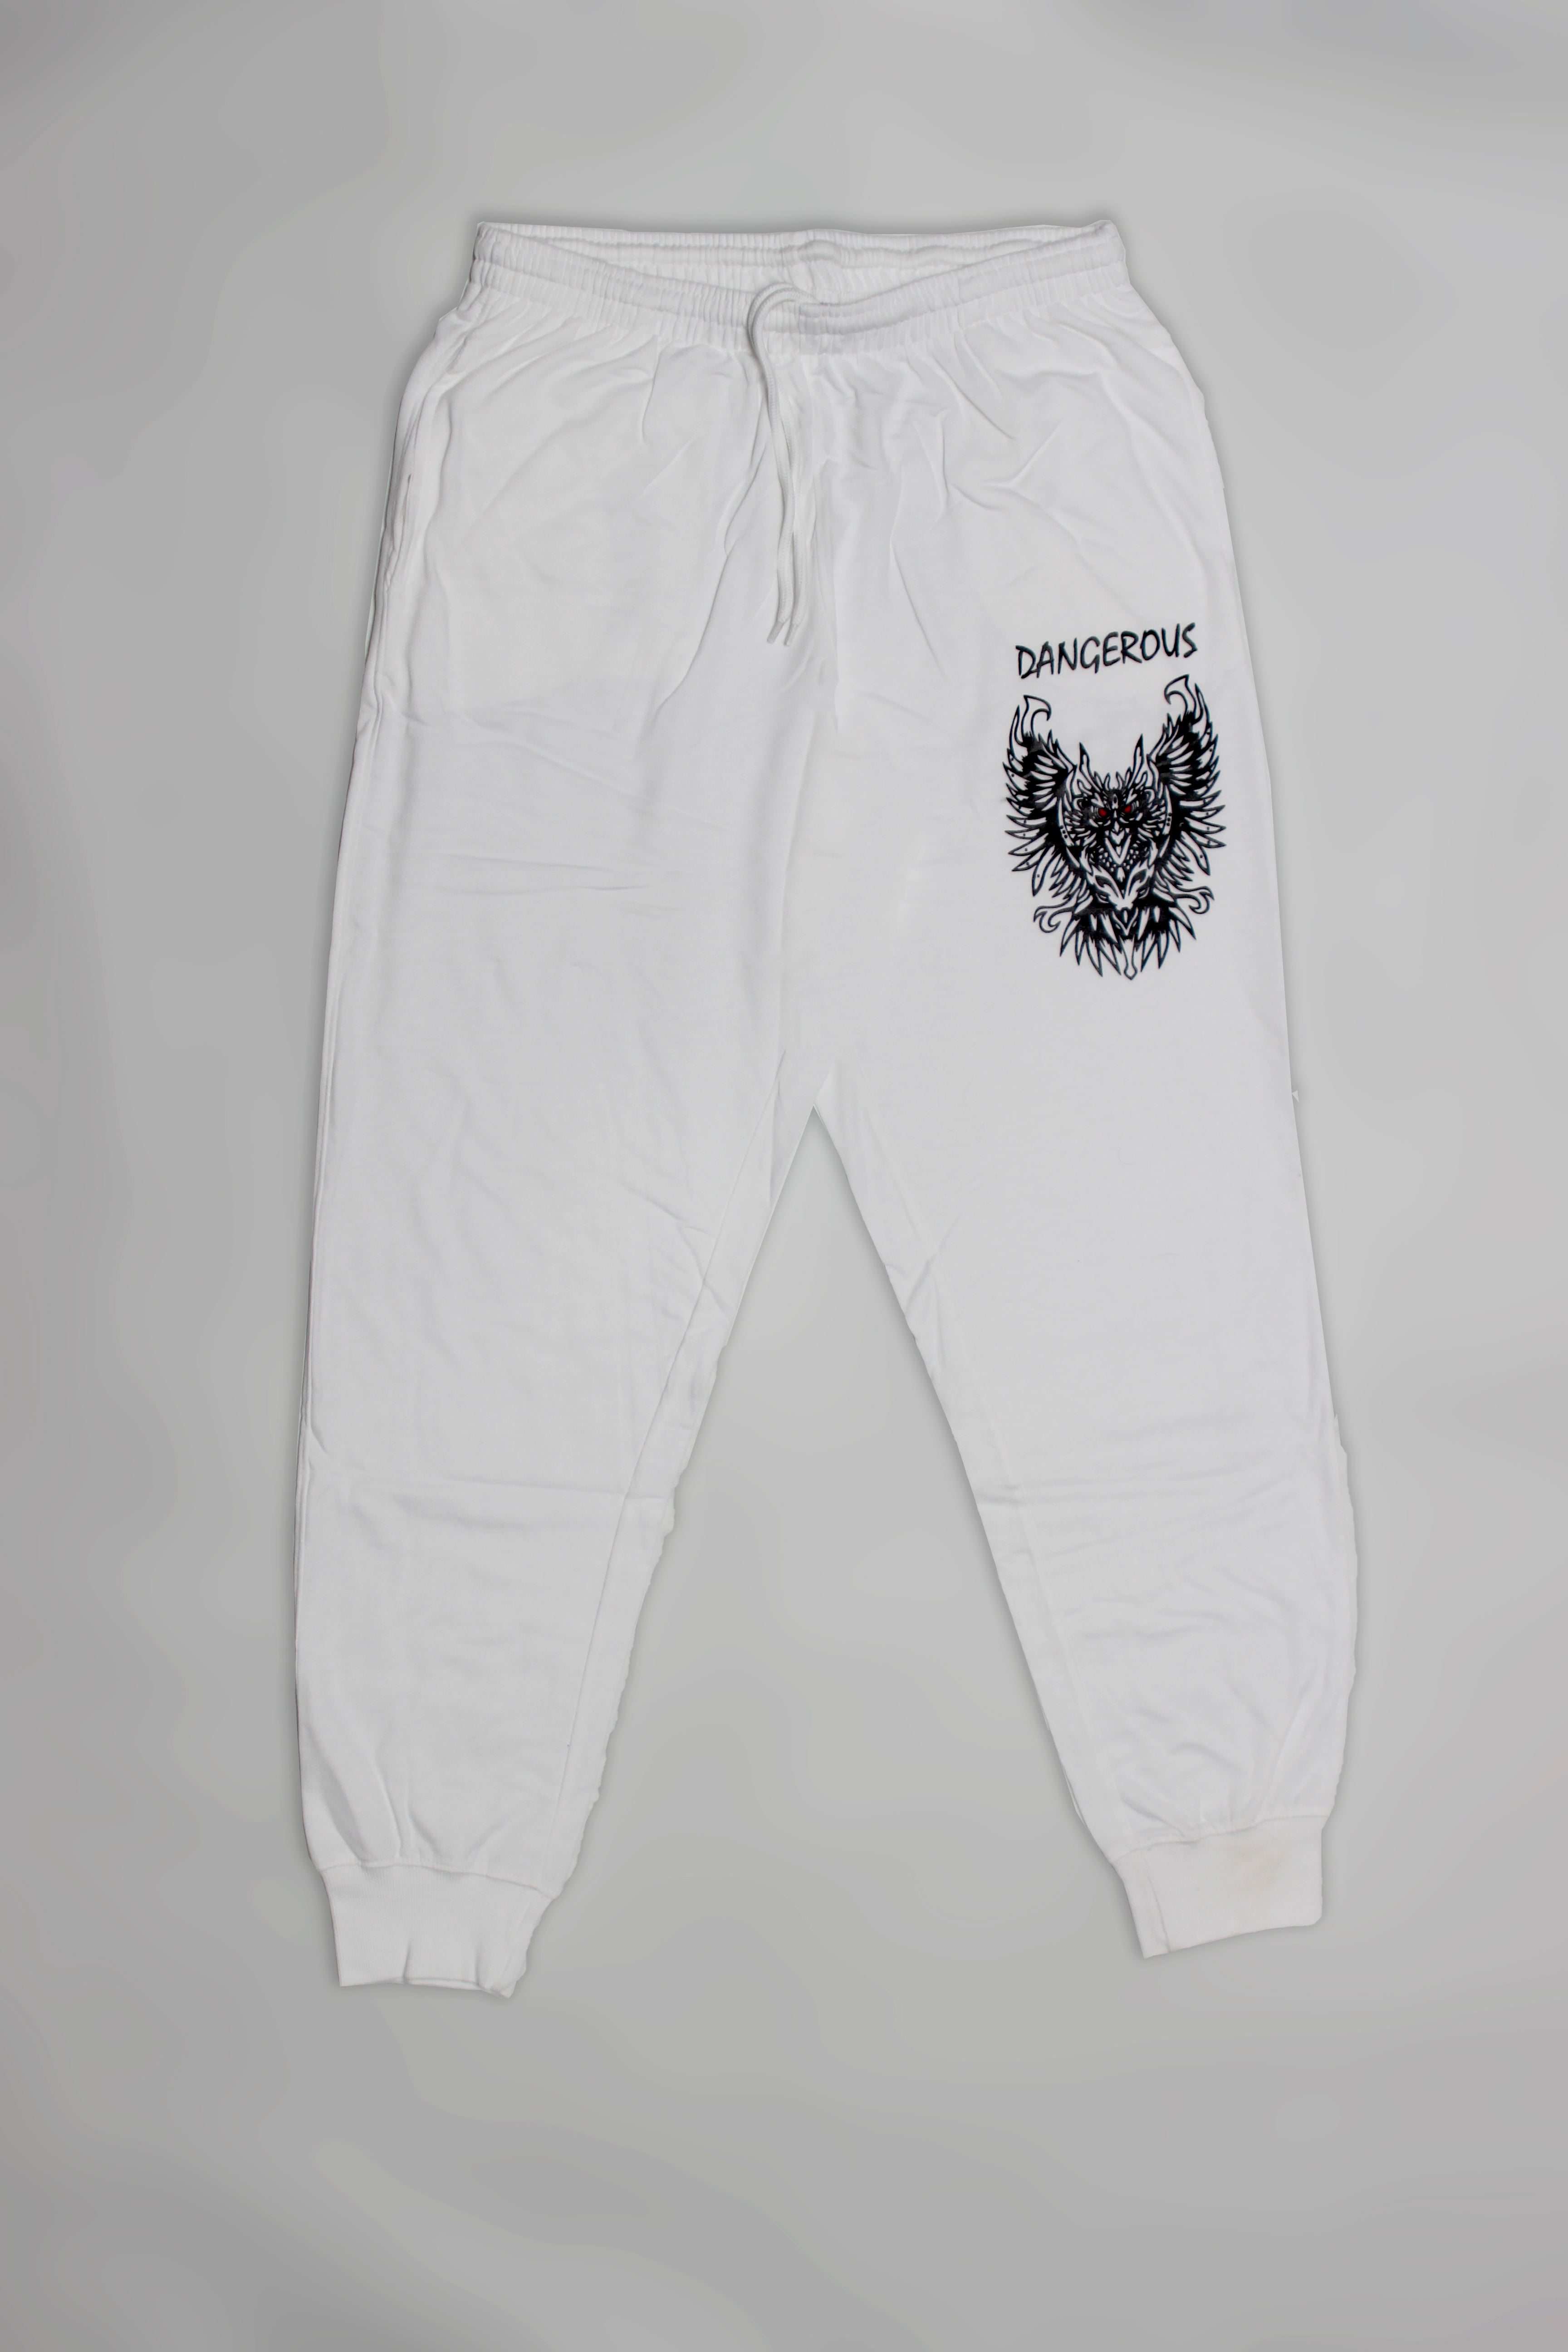 Dangerous Cuffed Trousers-MTRS-0069-White - FactoryX.pk